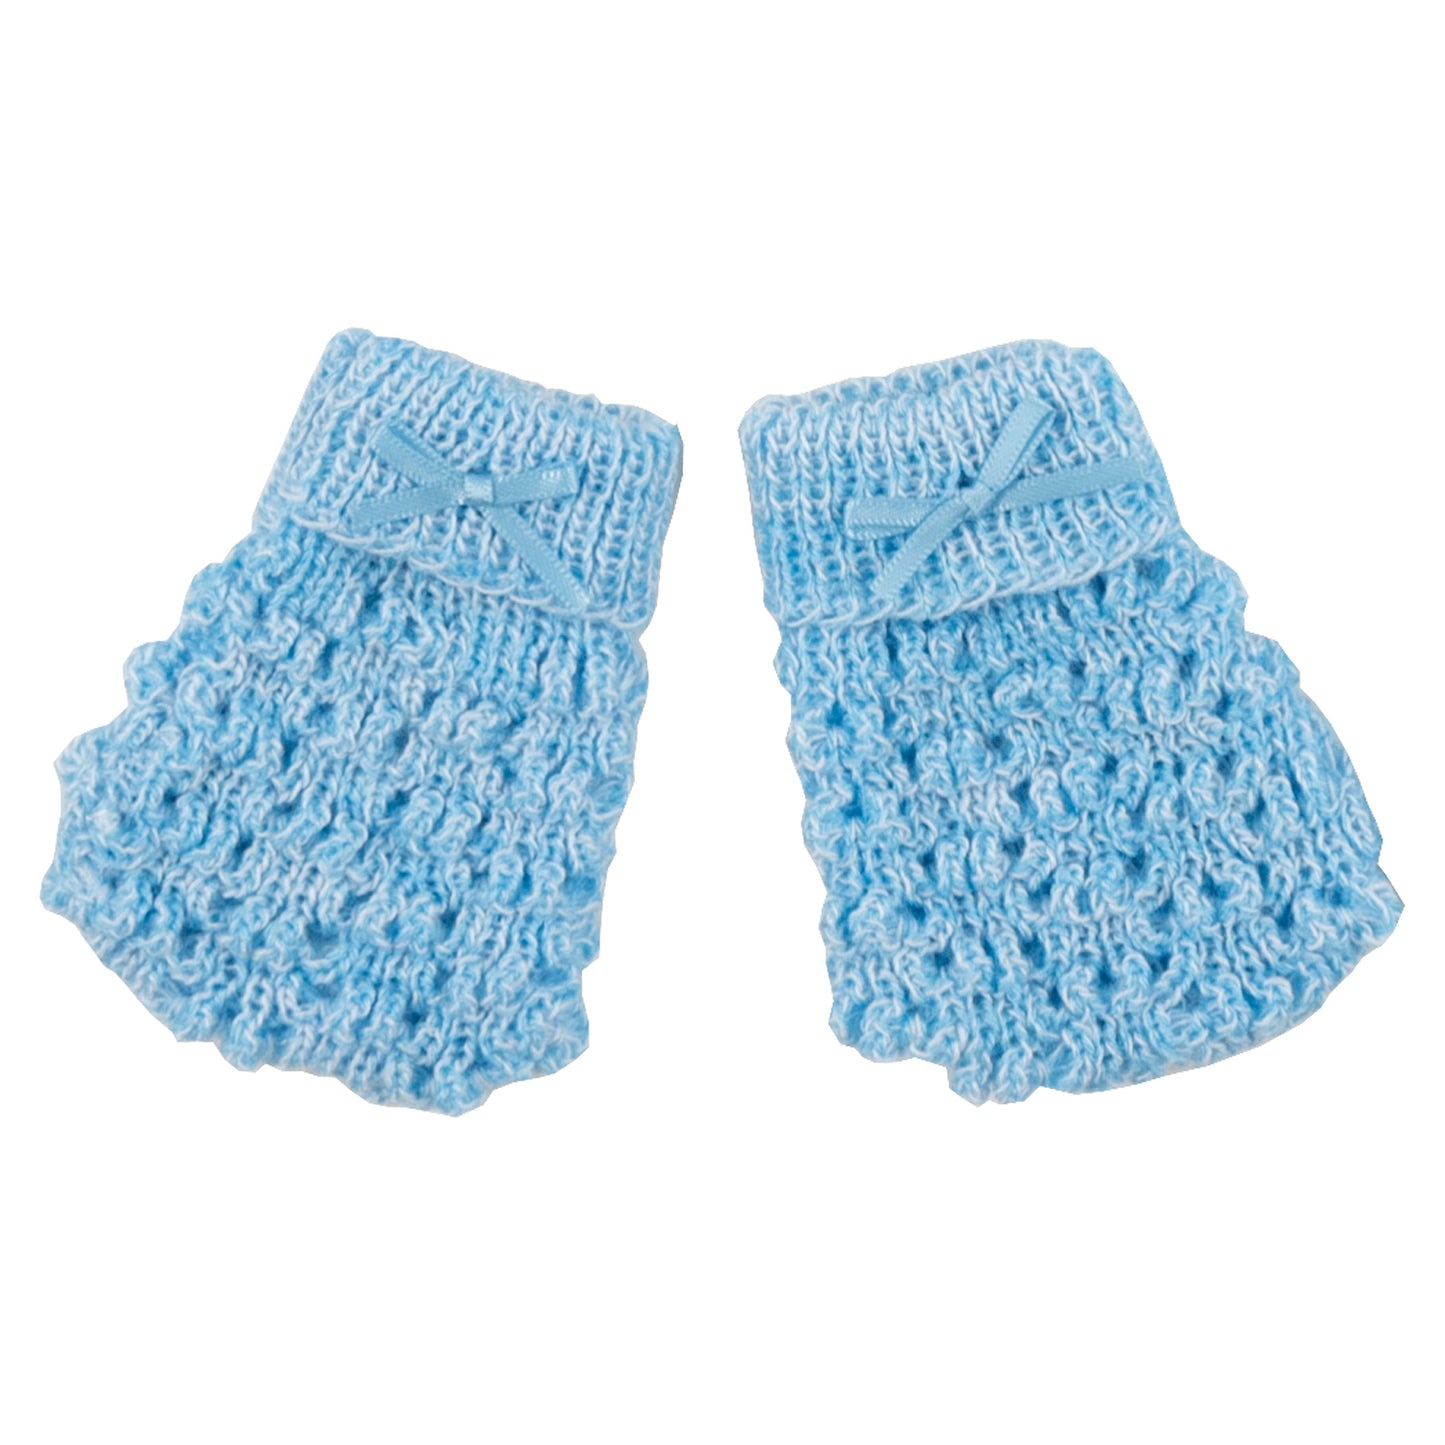 Set Newborn Crochet Blanket Five Piece Set Sweater Pants Hat Mittens